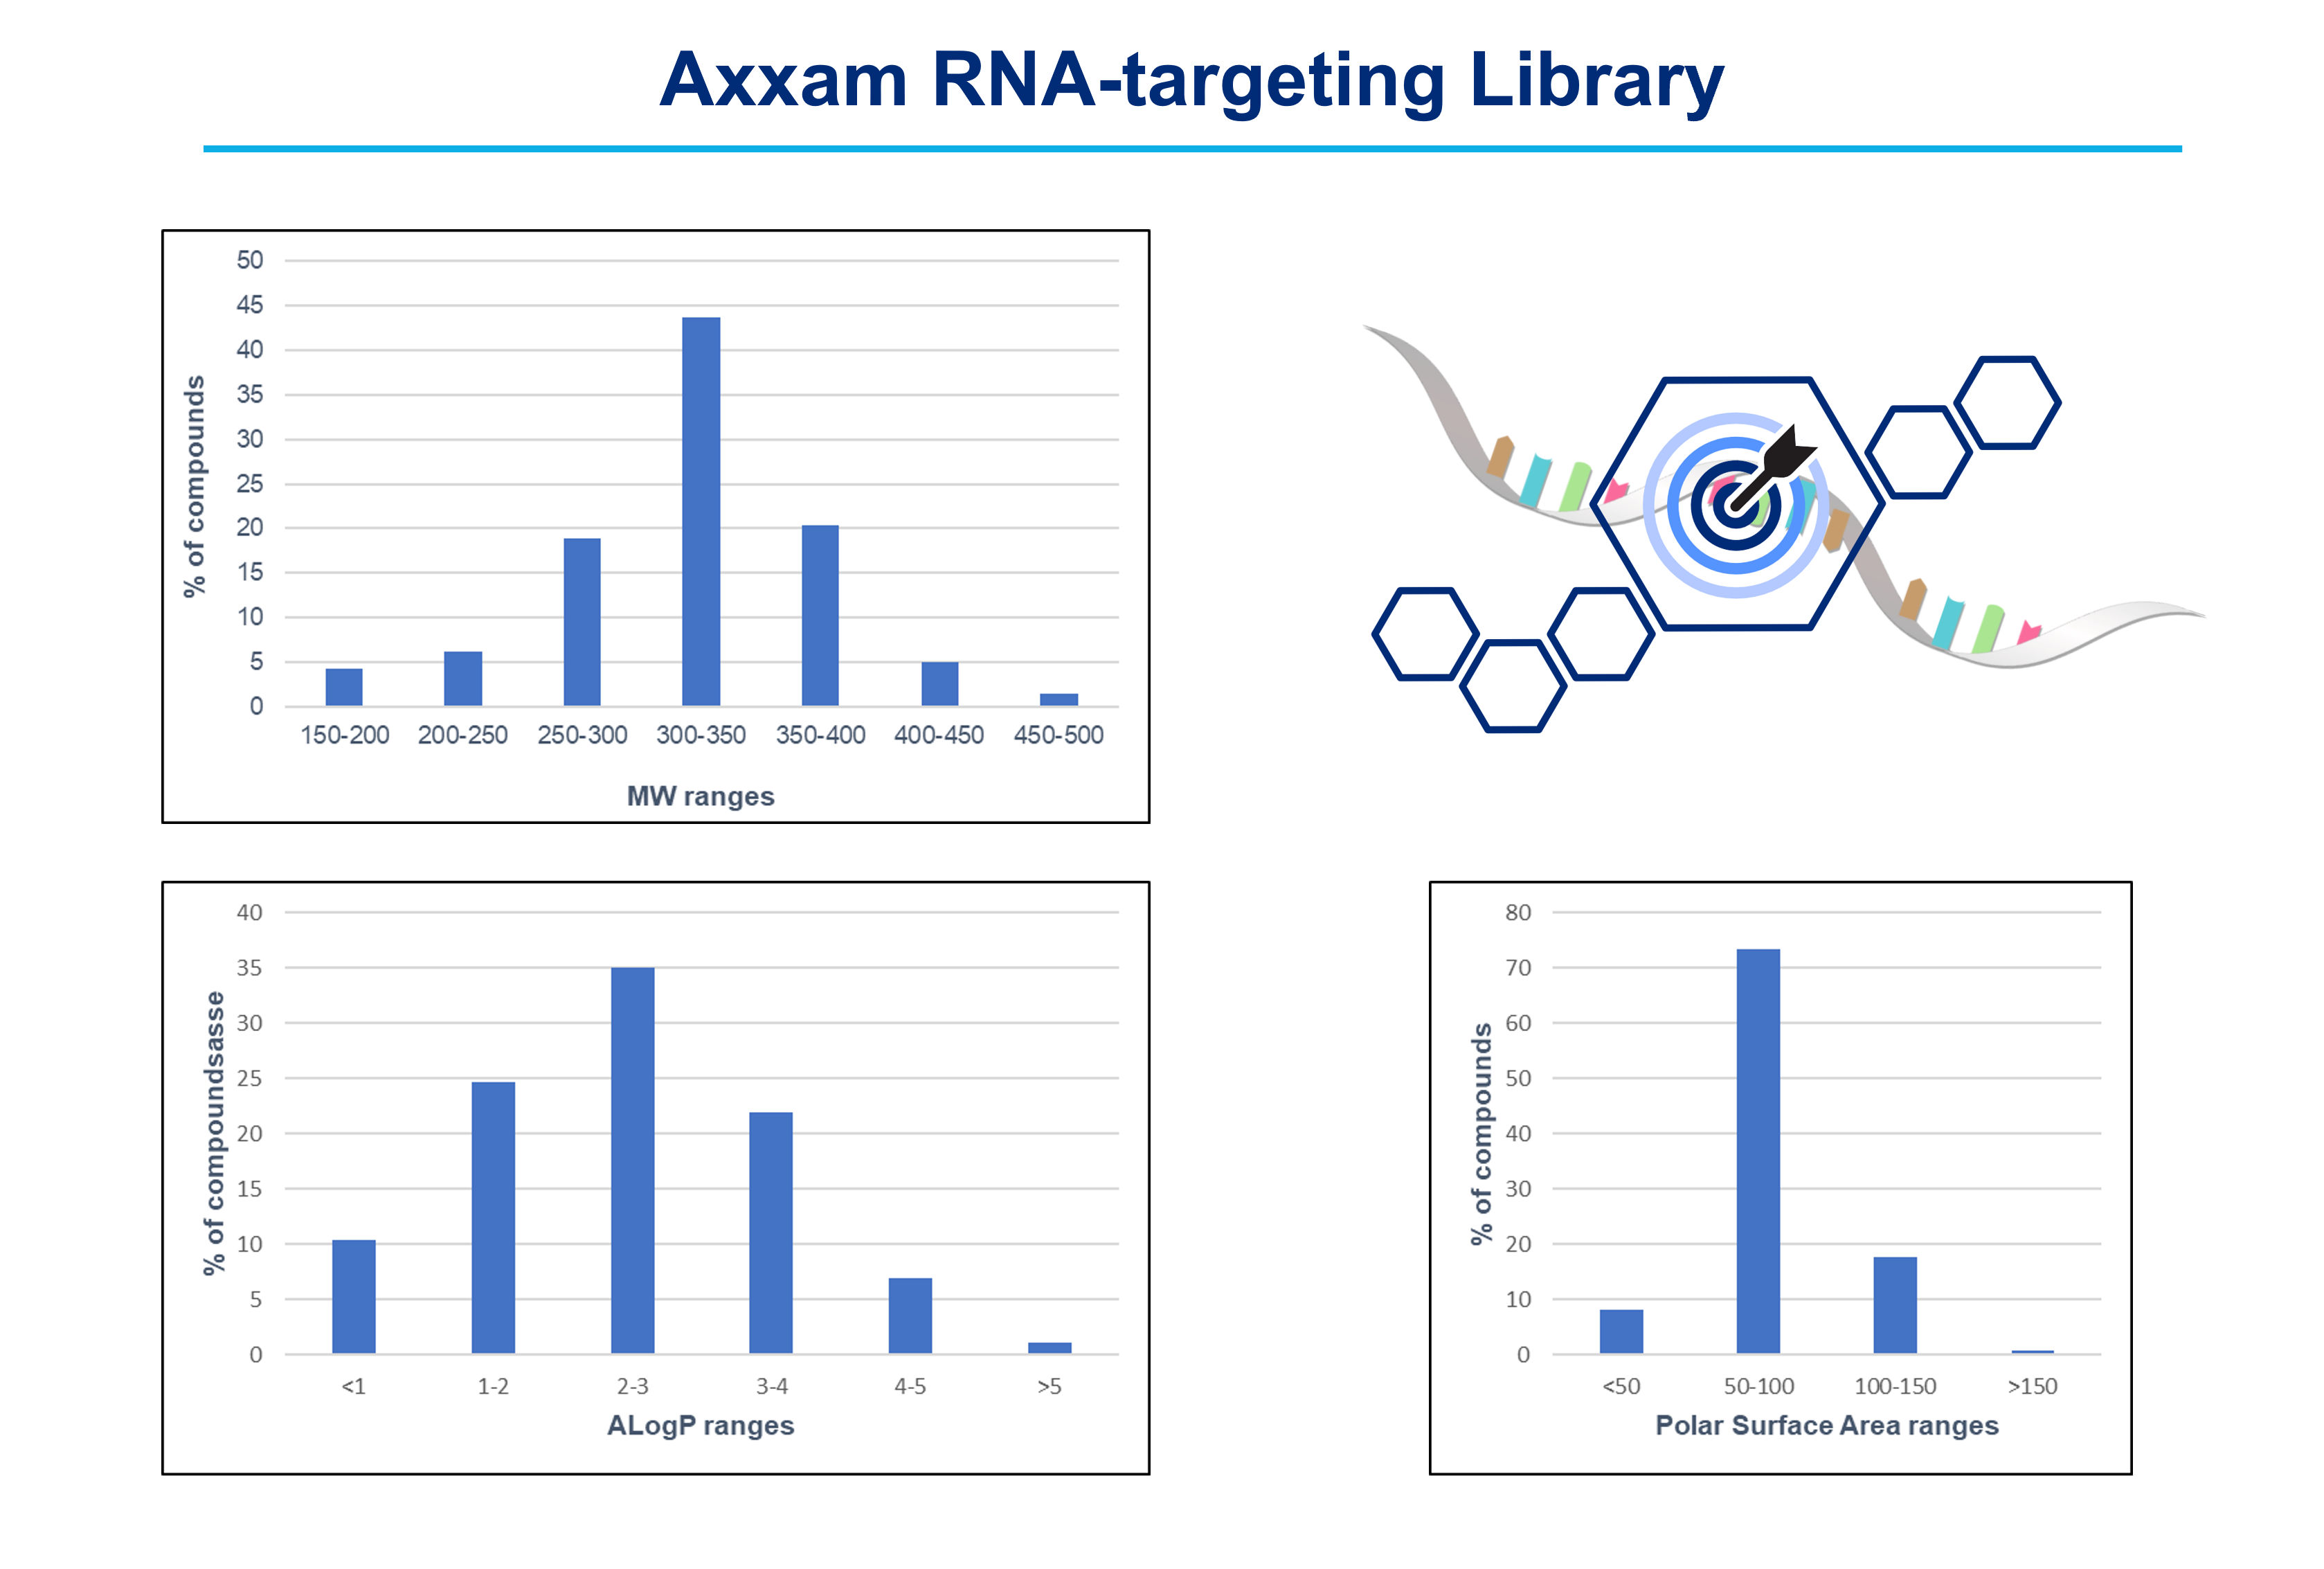 RNA-targeting library distribution